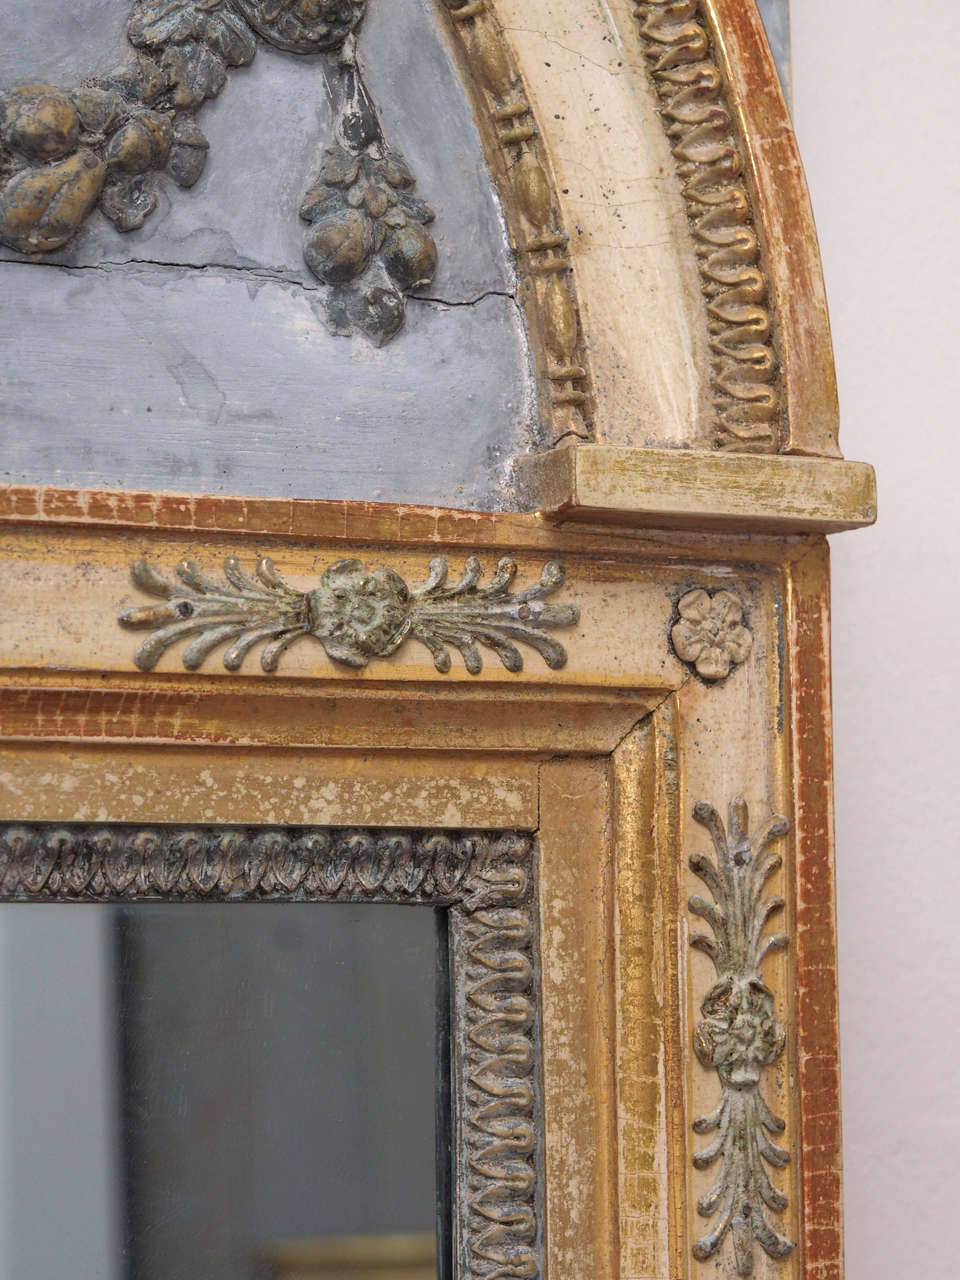 19th Century Swedish Mirror